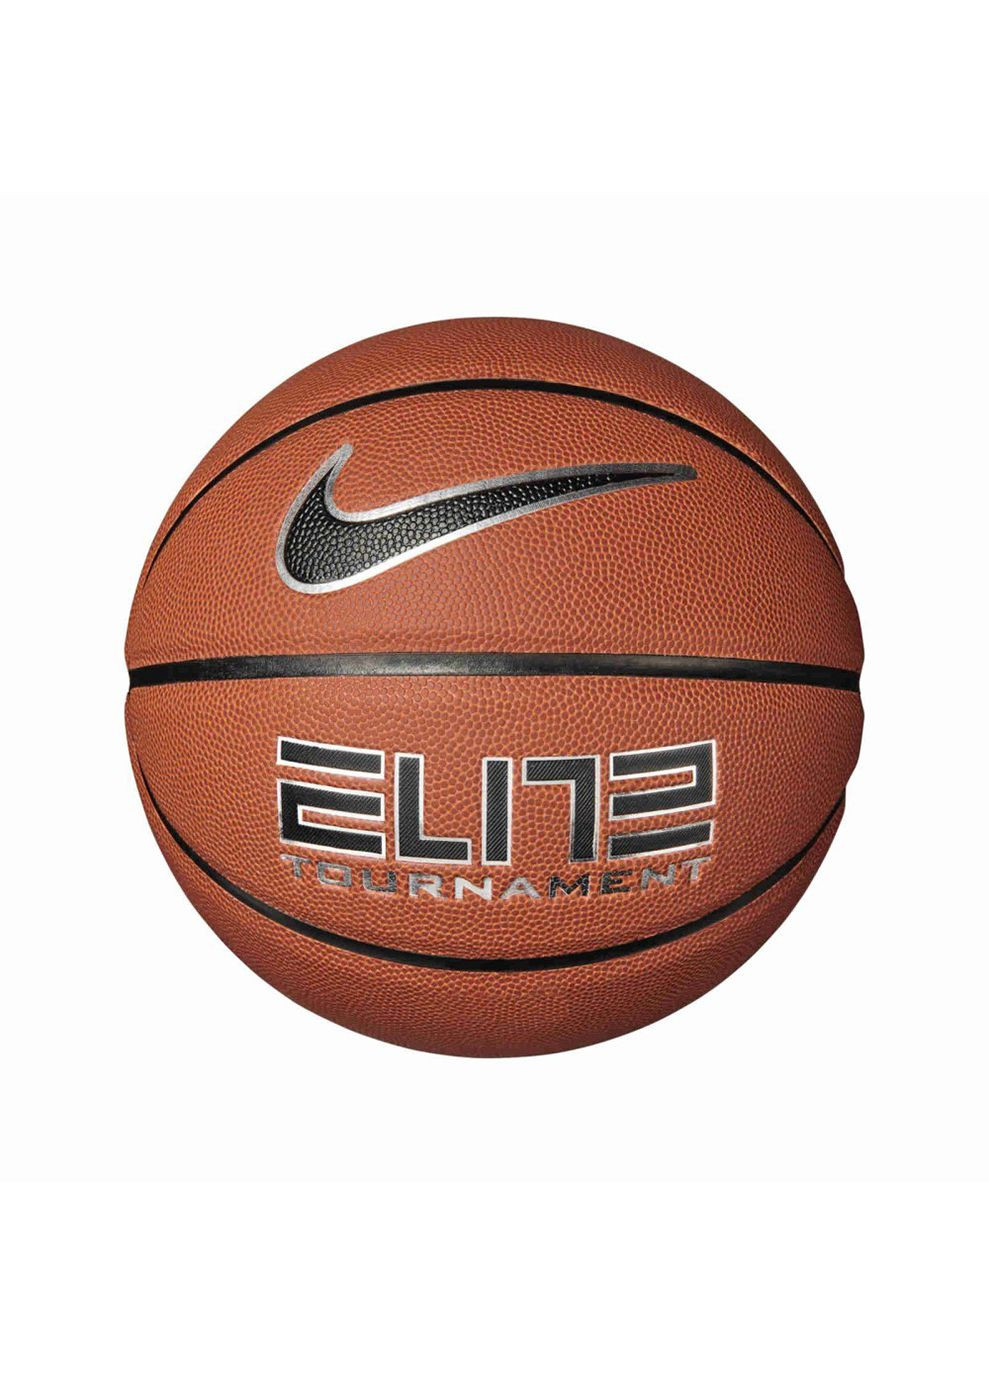 М'яч баскетбольний ELITE TOURNAMENT 8P DEFLATED помаранчевий Уні 7 Nike (268747100)